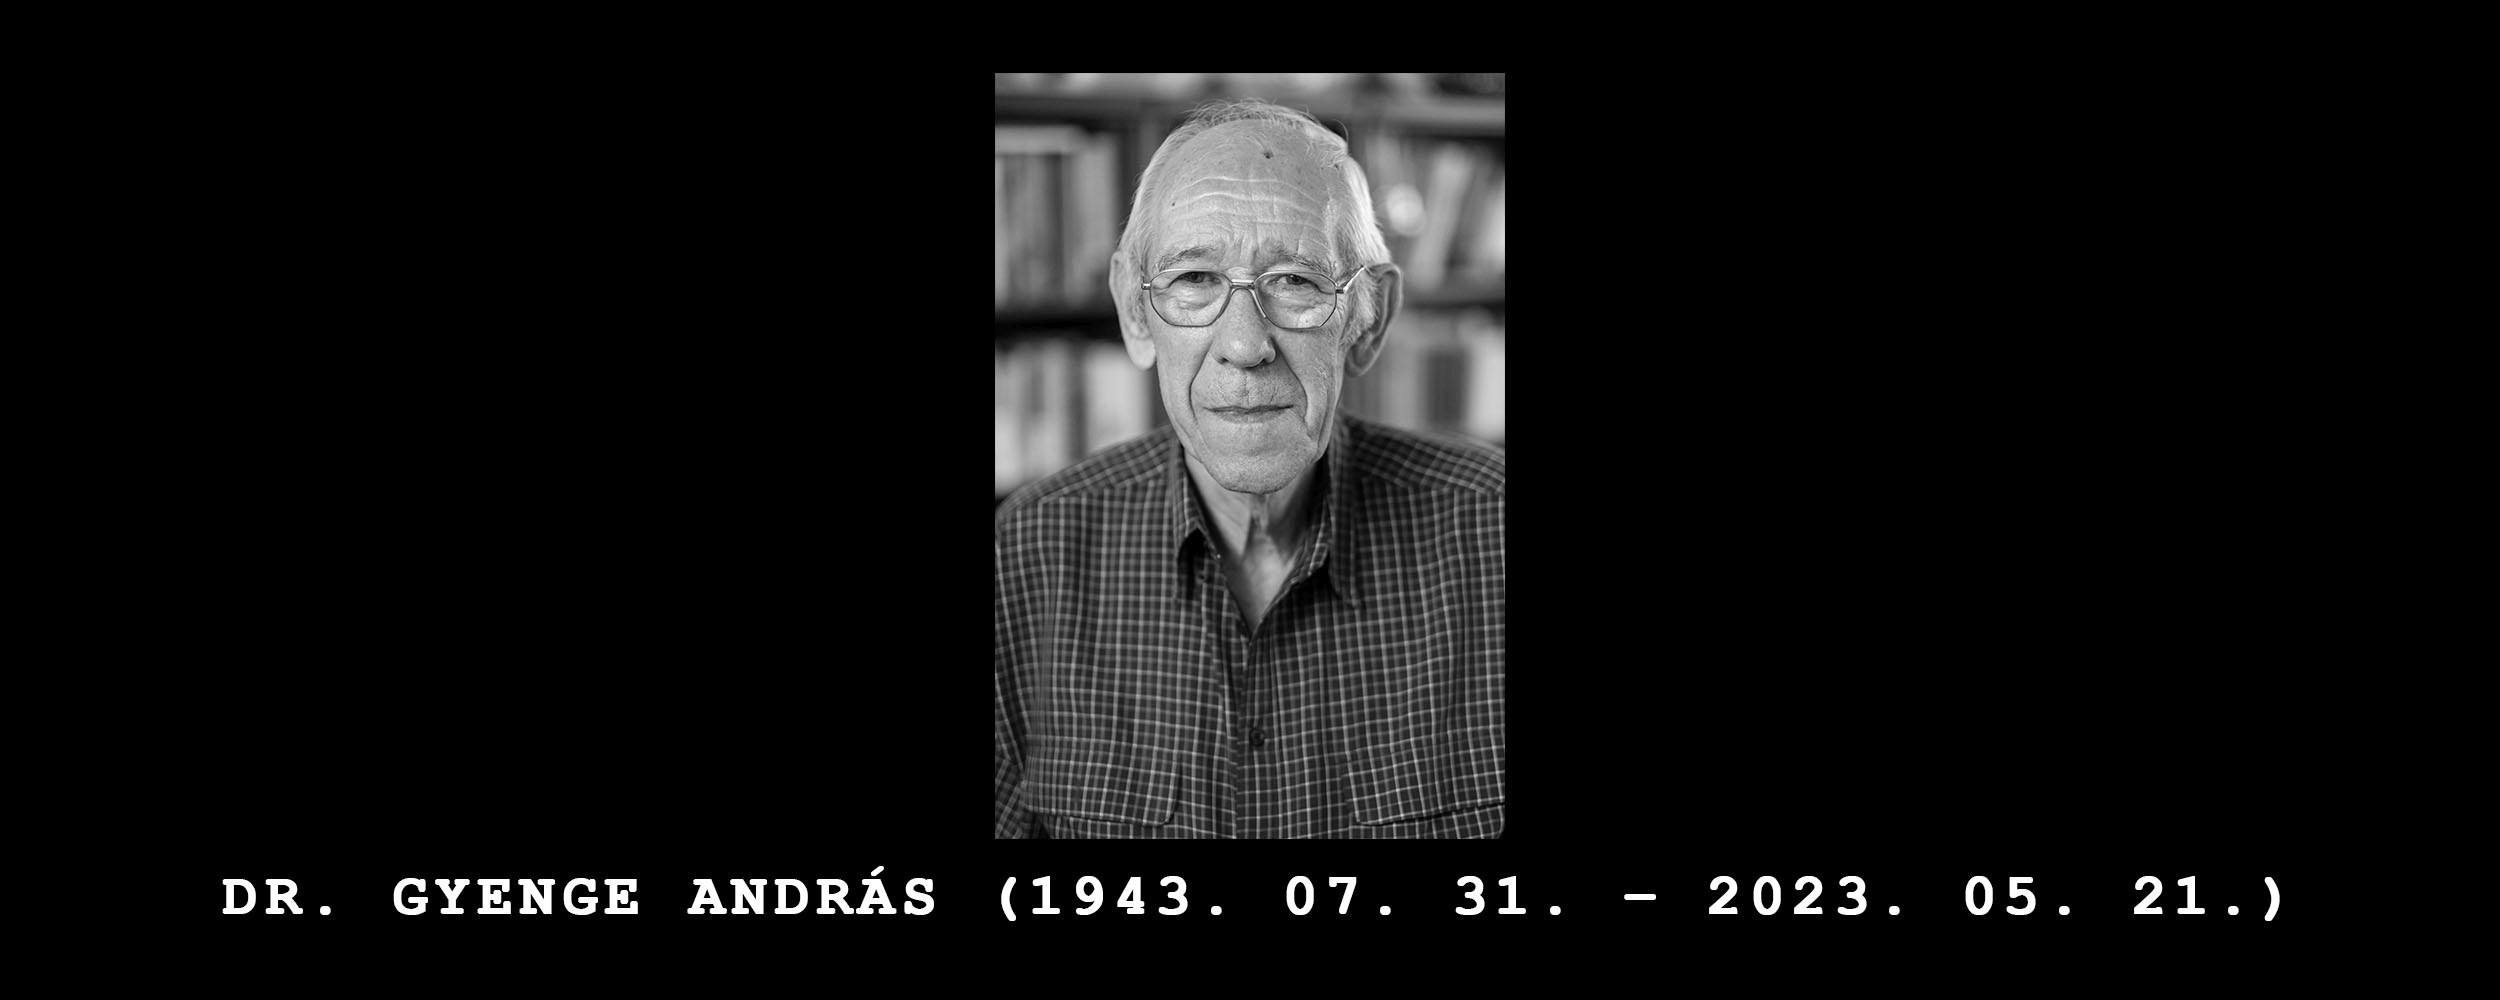 Elhunyt Dr. Gyenge András (1943. 07. 31. – 2023. 05. 21.)